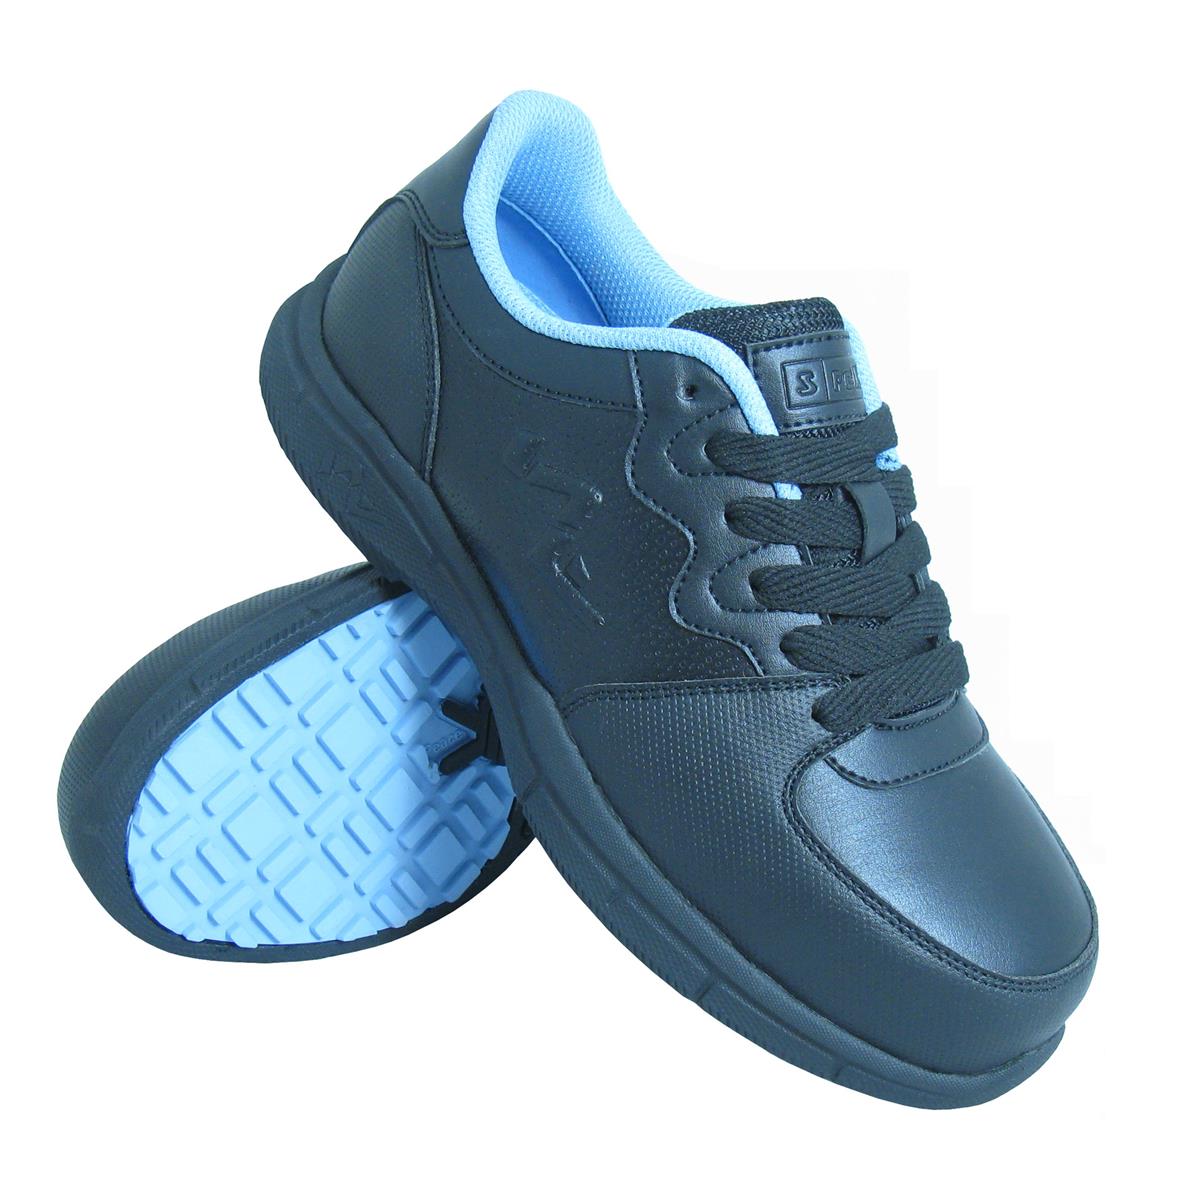 Genuine Grip Footwear- 520 Black Comp Toe Athletic Women's Shoe-eSafety Supplies, Inc